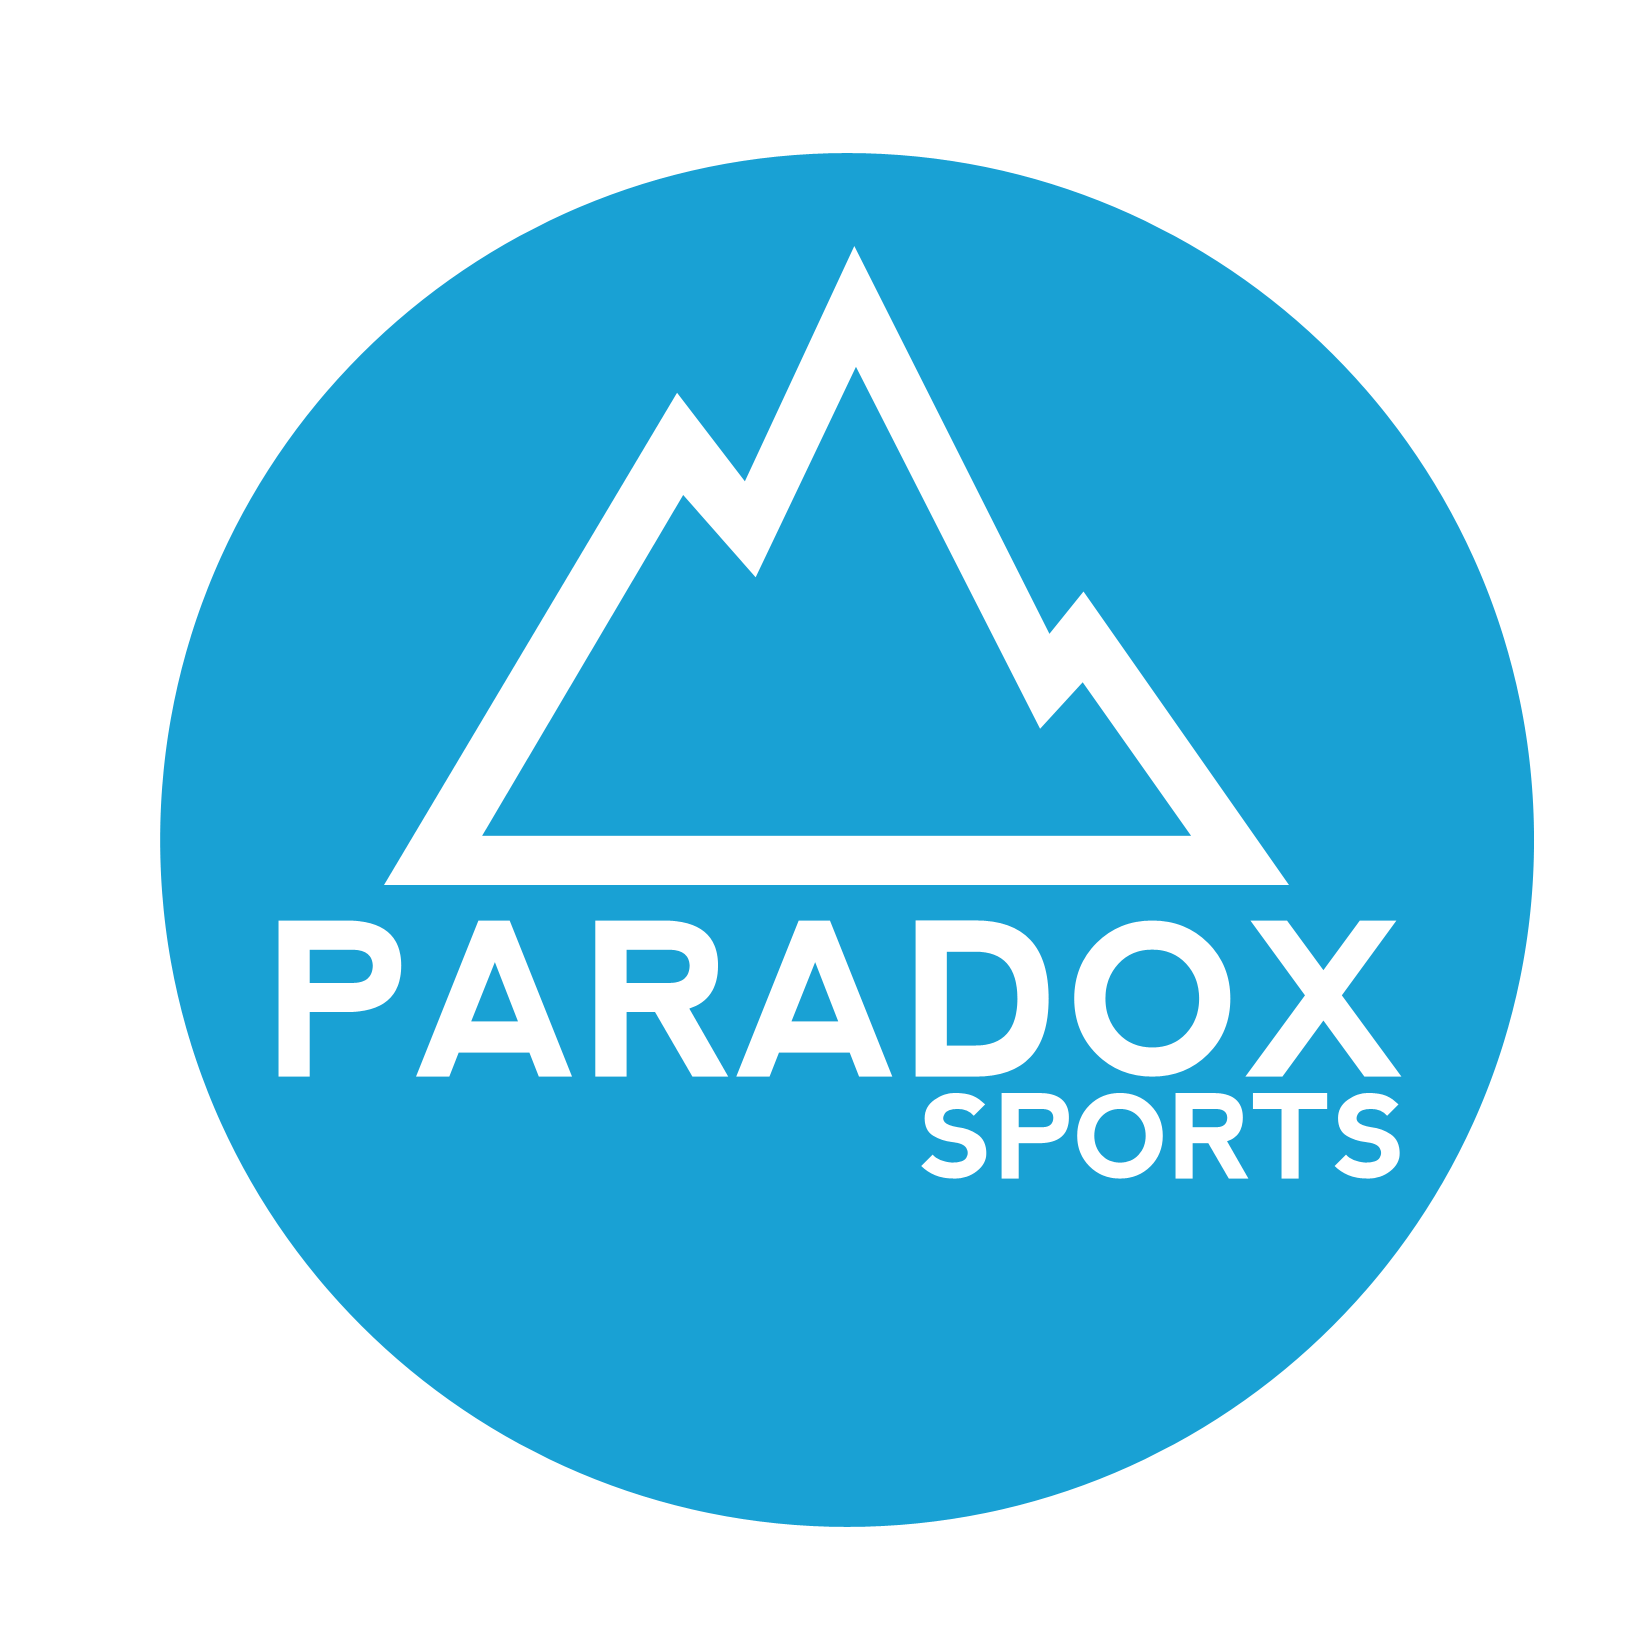 Paradox Sports Logo